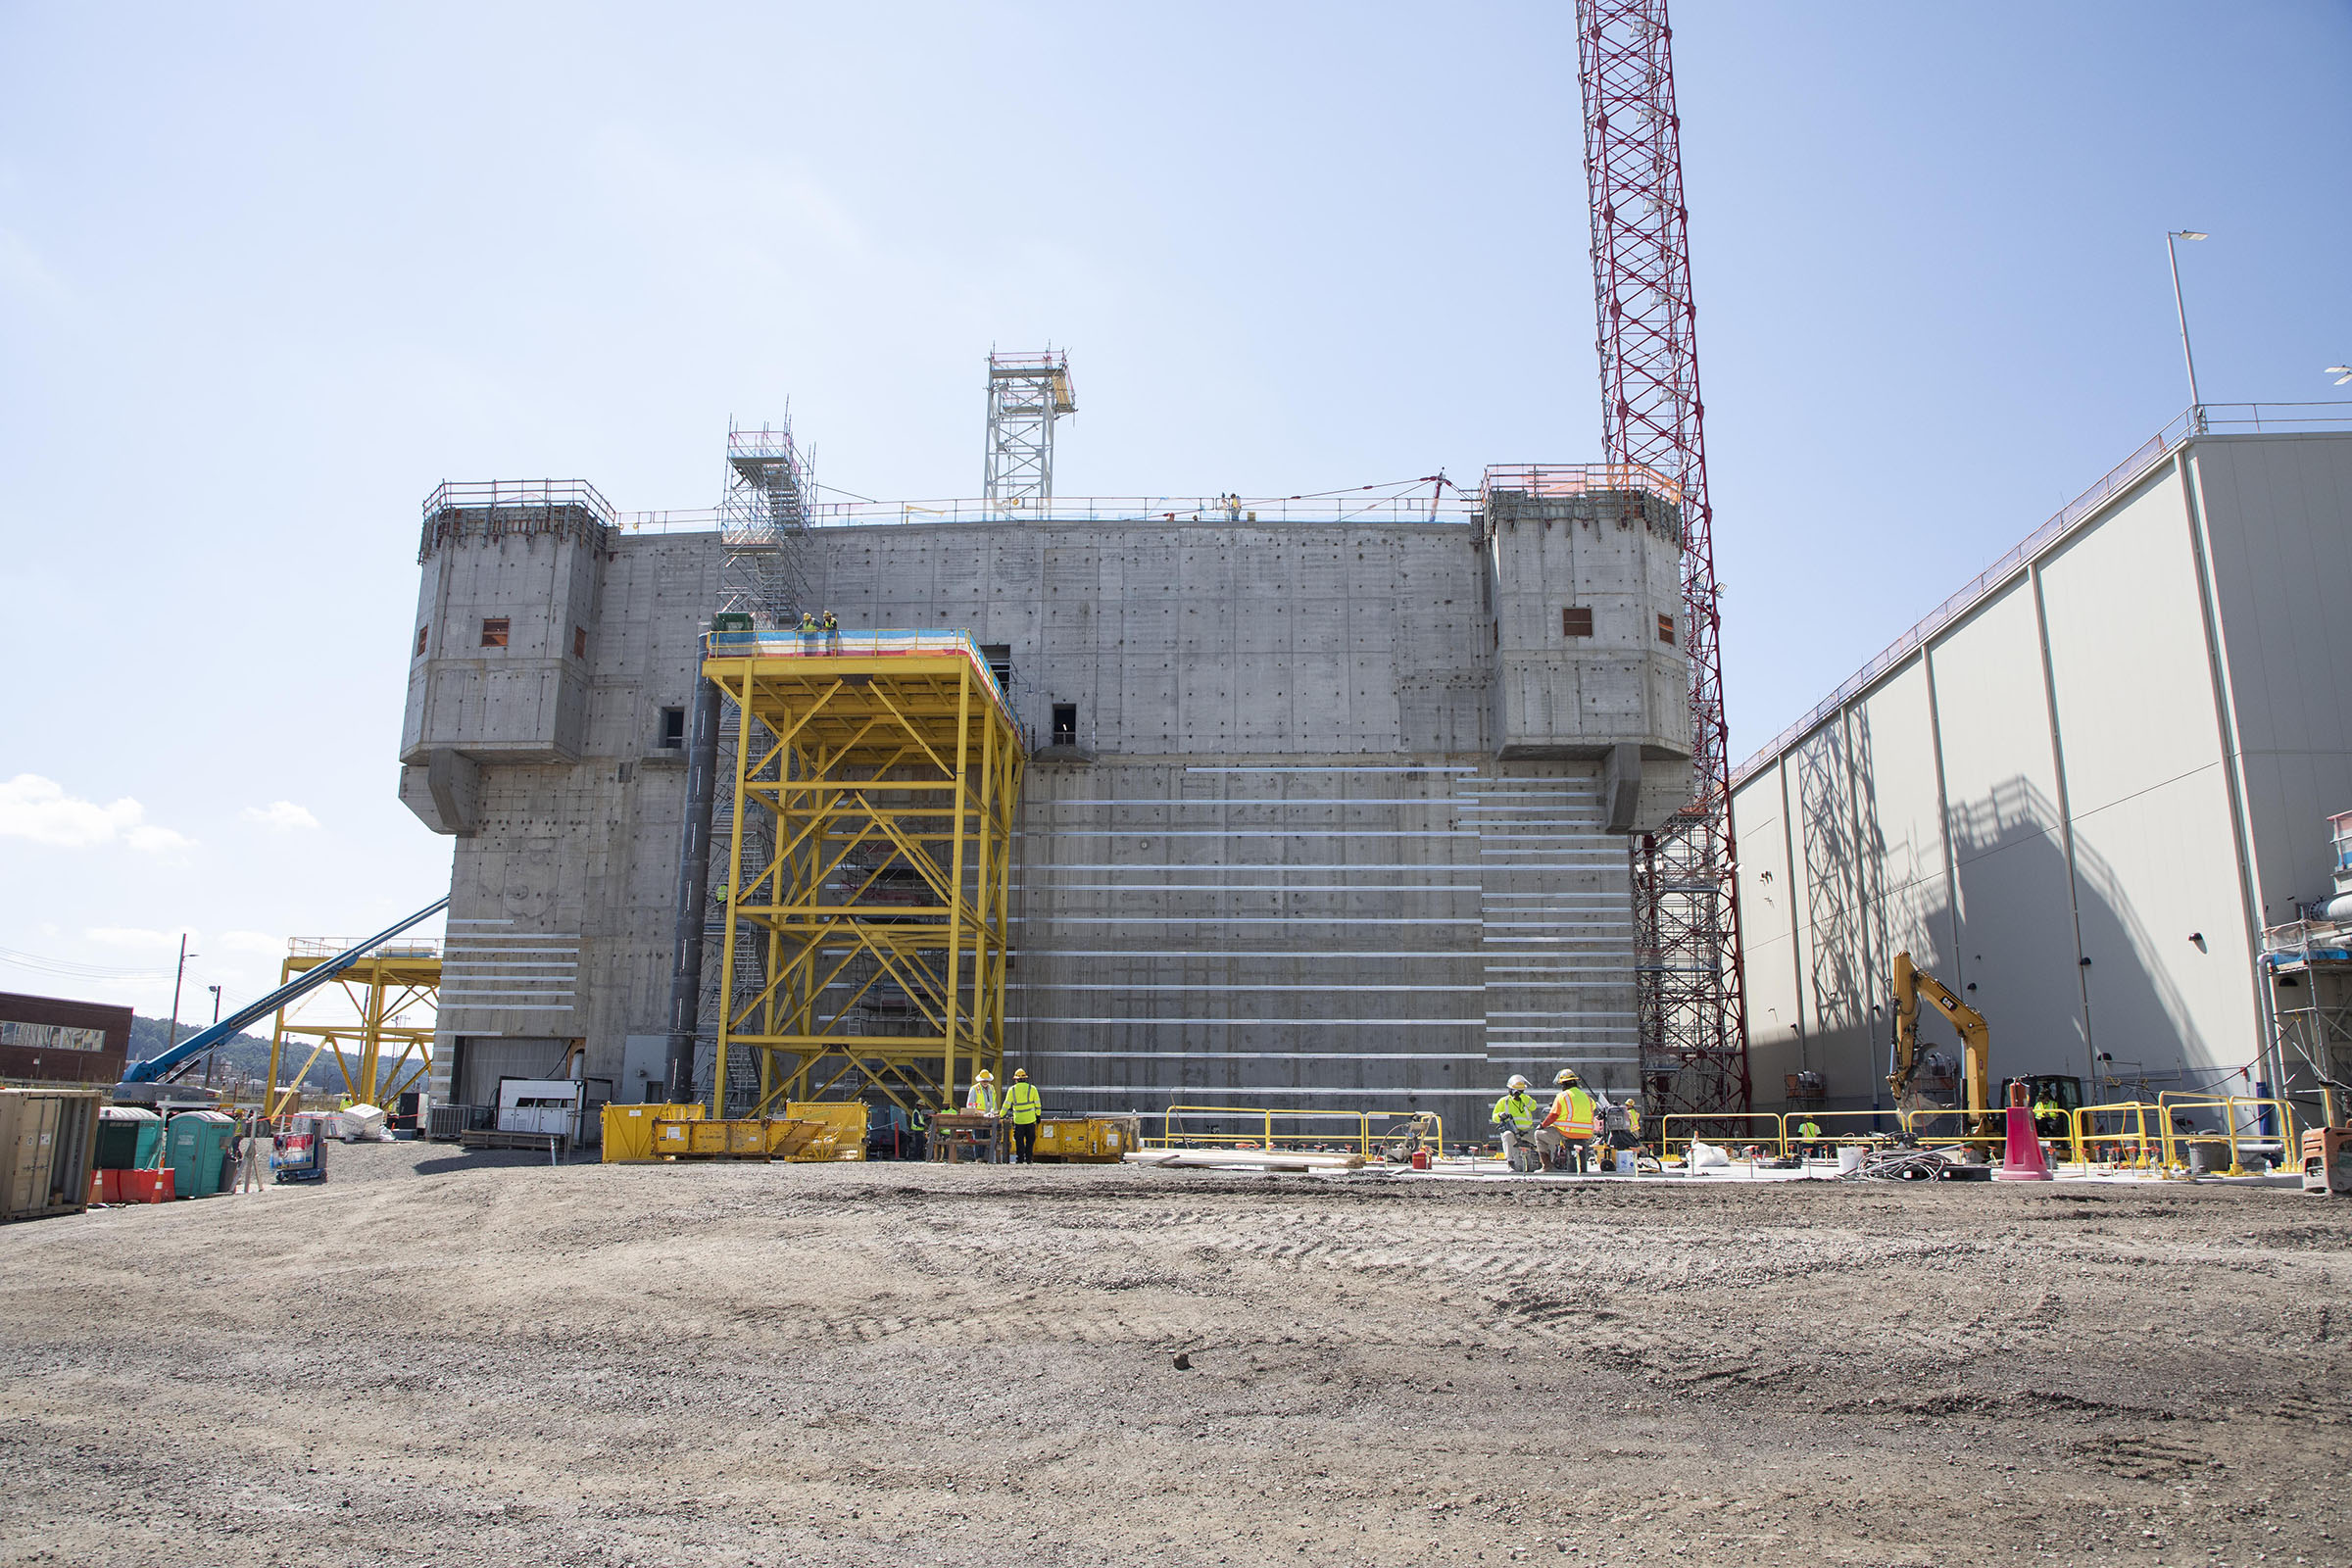 Uranium Processing Facility's Main Process Building